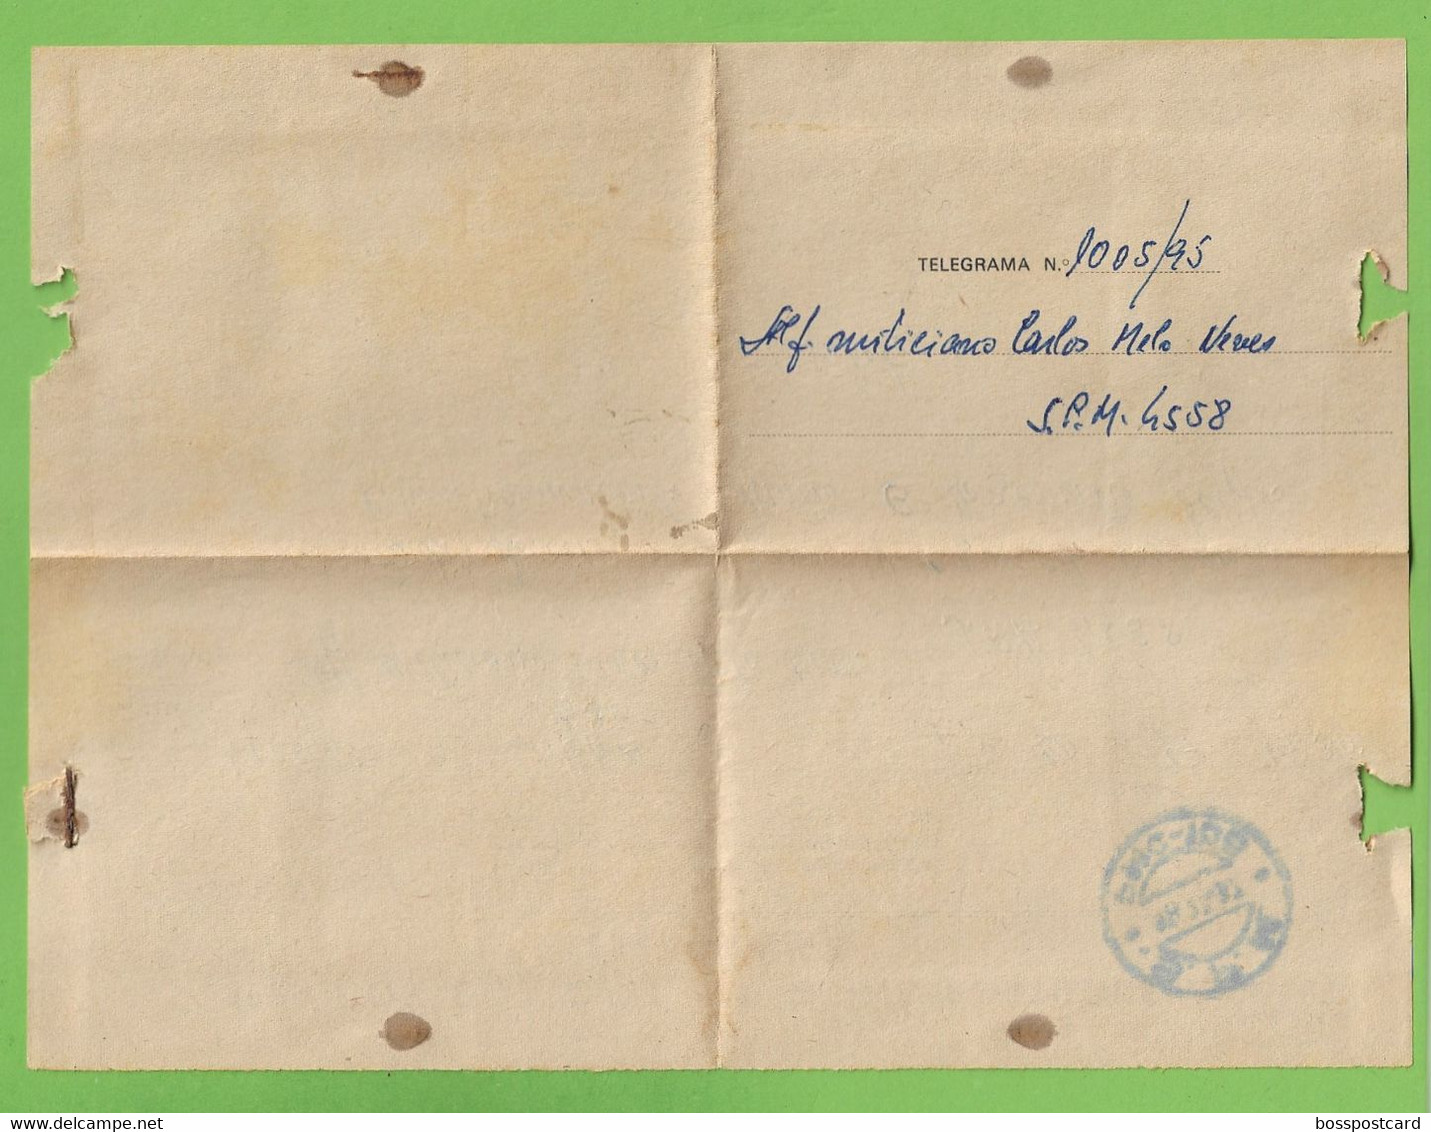 História Postal - Filatelia - Telegrama - Telegram - Philately - Militar - Military - Guiné - Portugal - Storia Postale